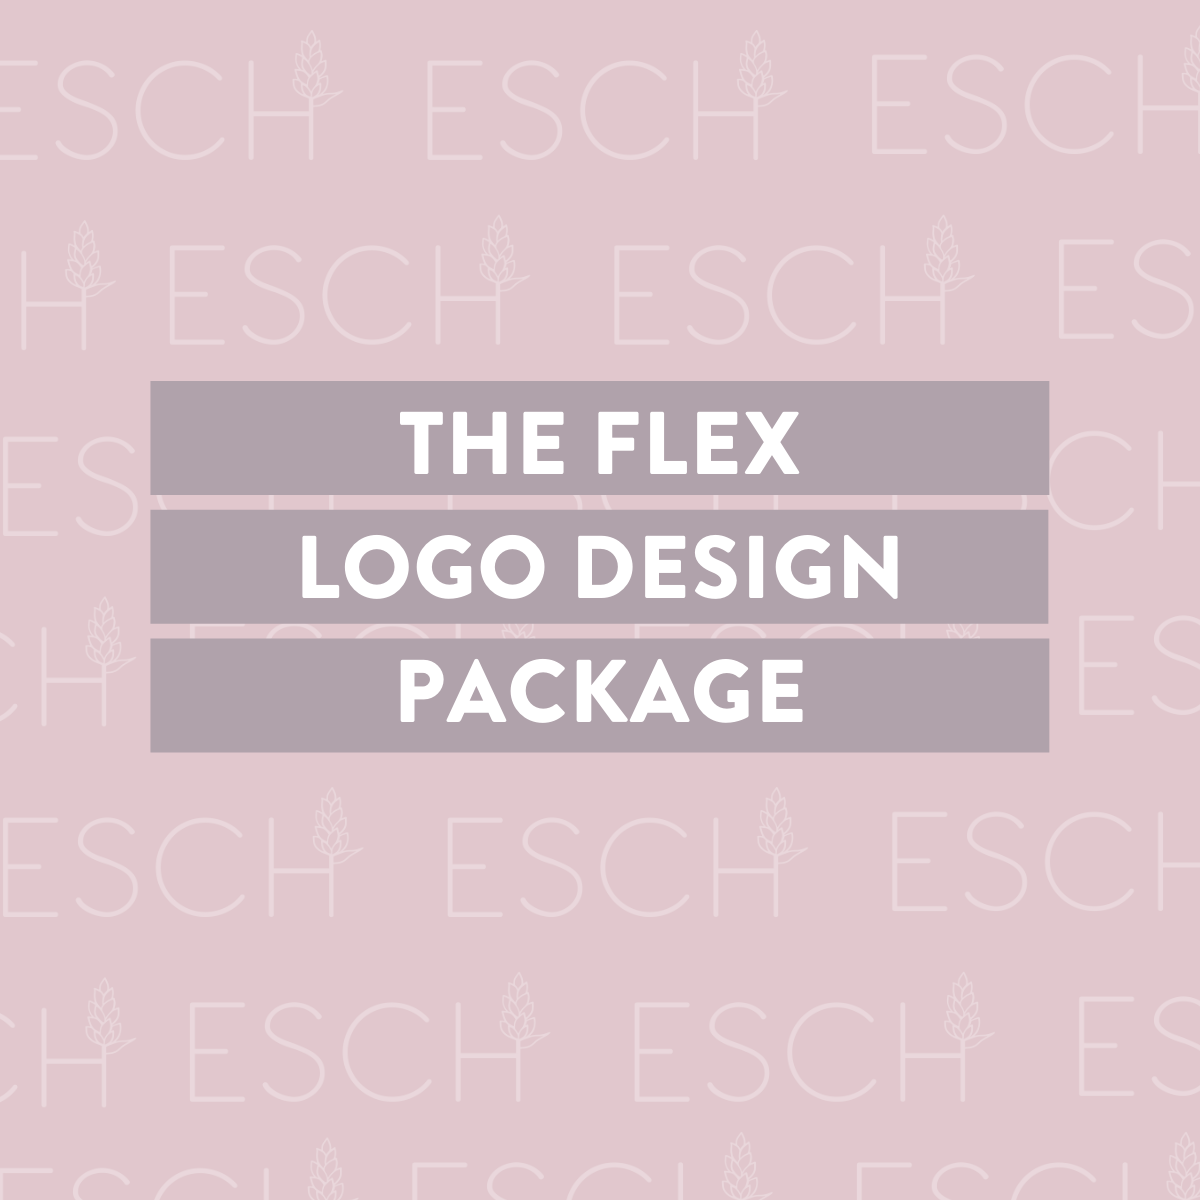 The Flex Logo Design Package